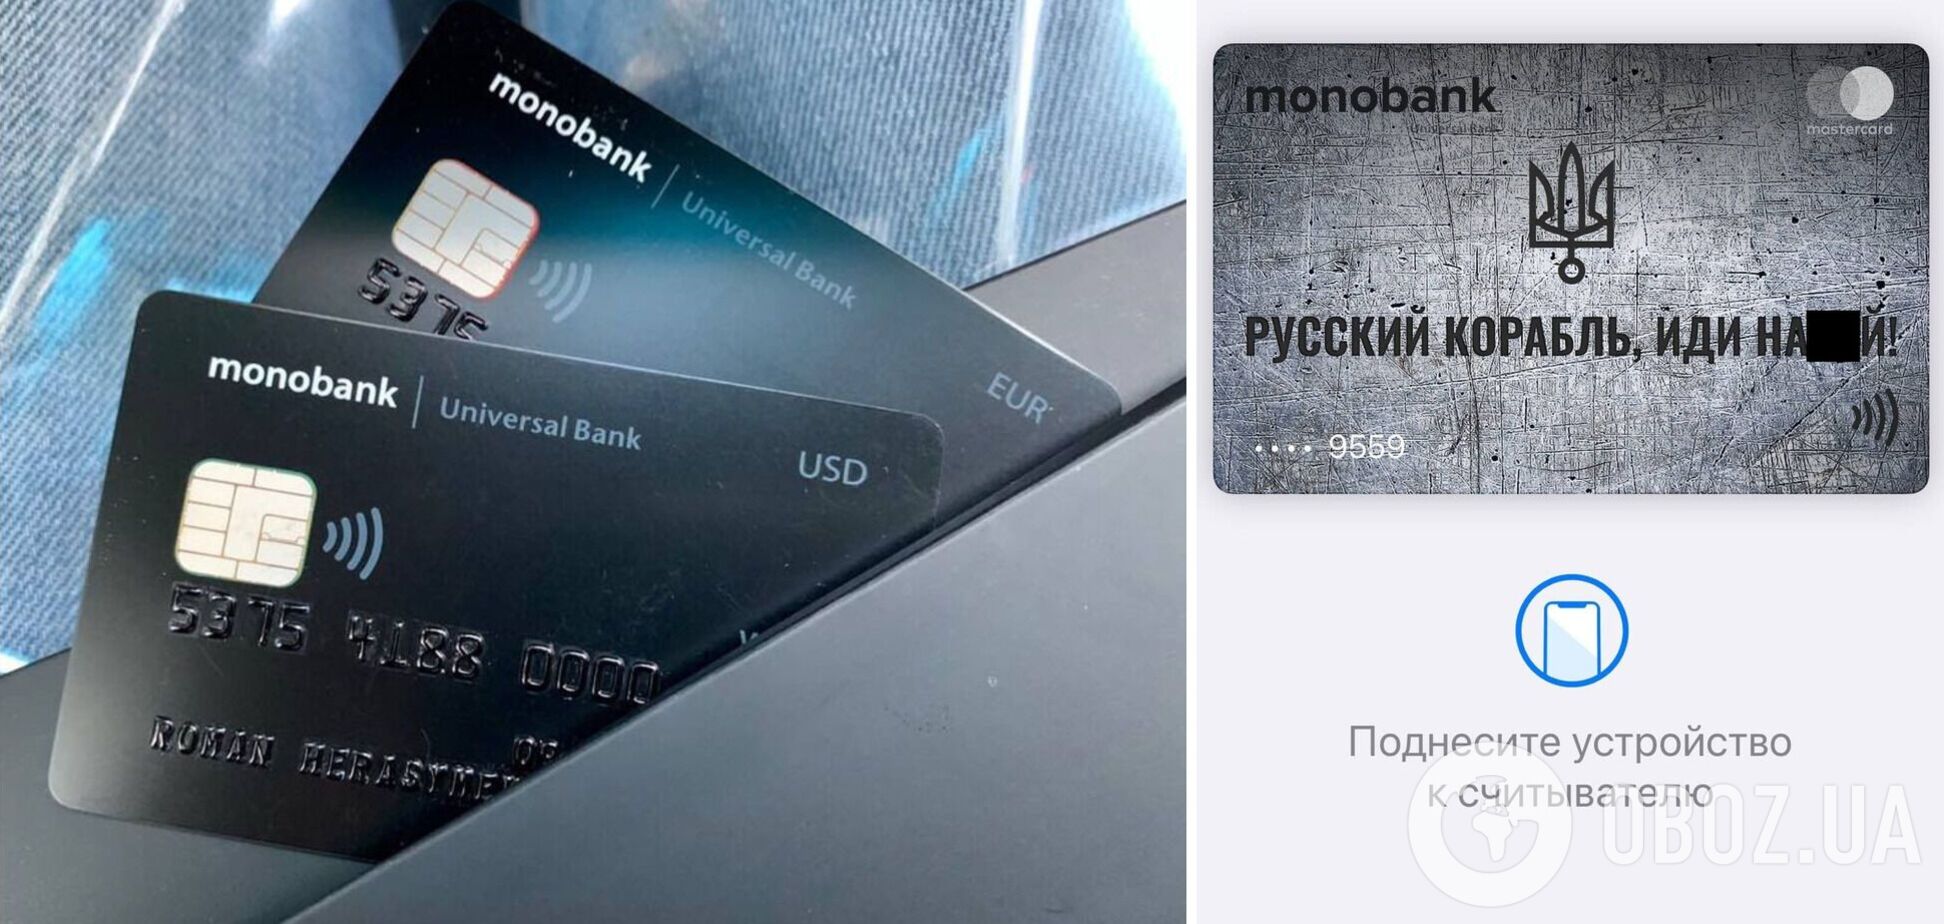 Monobank поддержал Украину